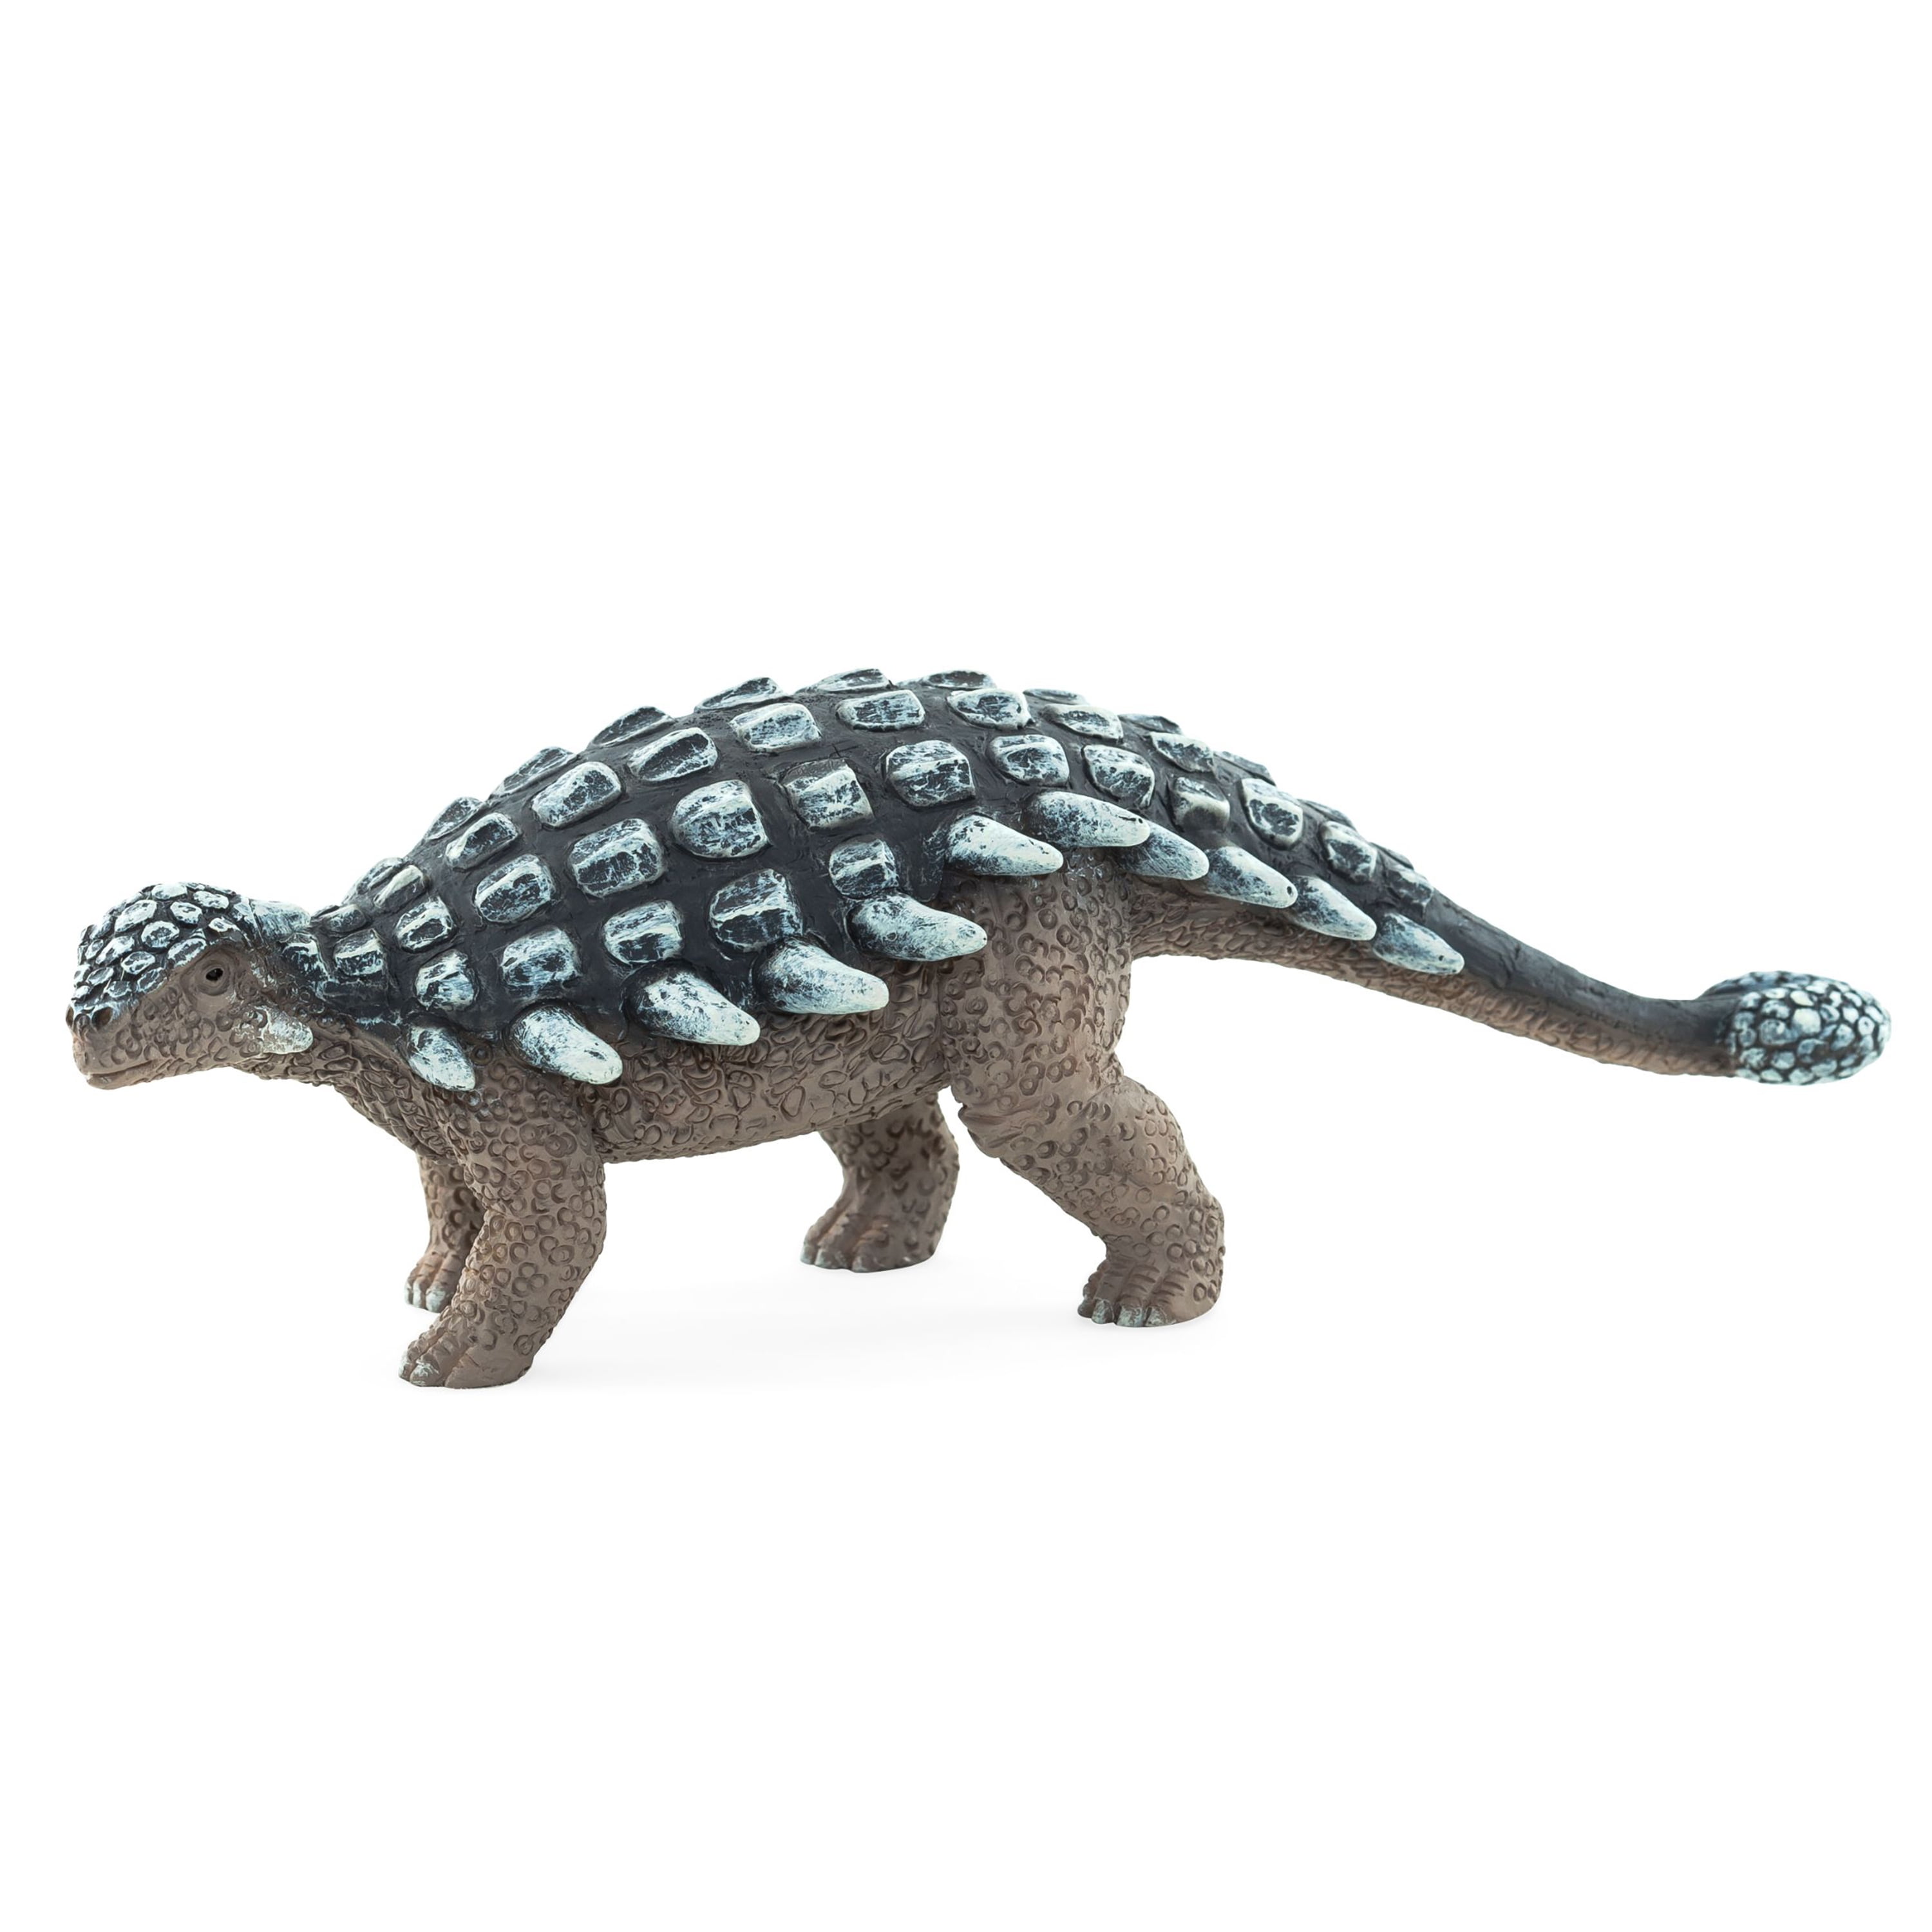 Mojo STEGOSAURUS DINOSAUR model figure toy Jurassic prehistoric figurine gift 